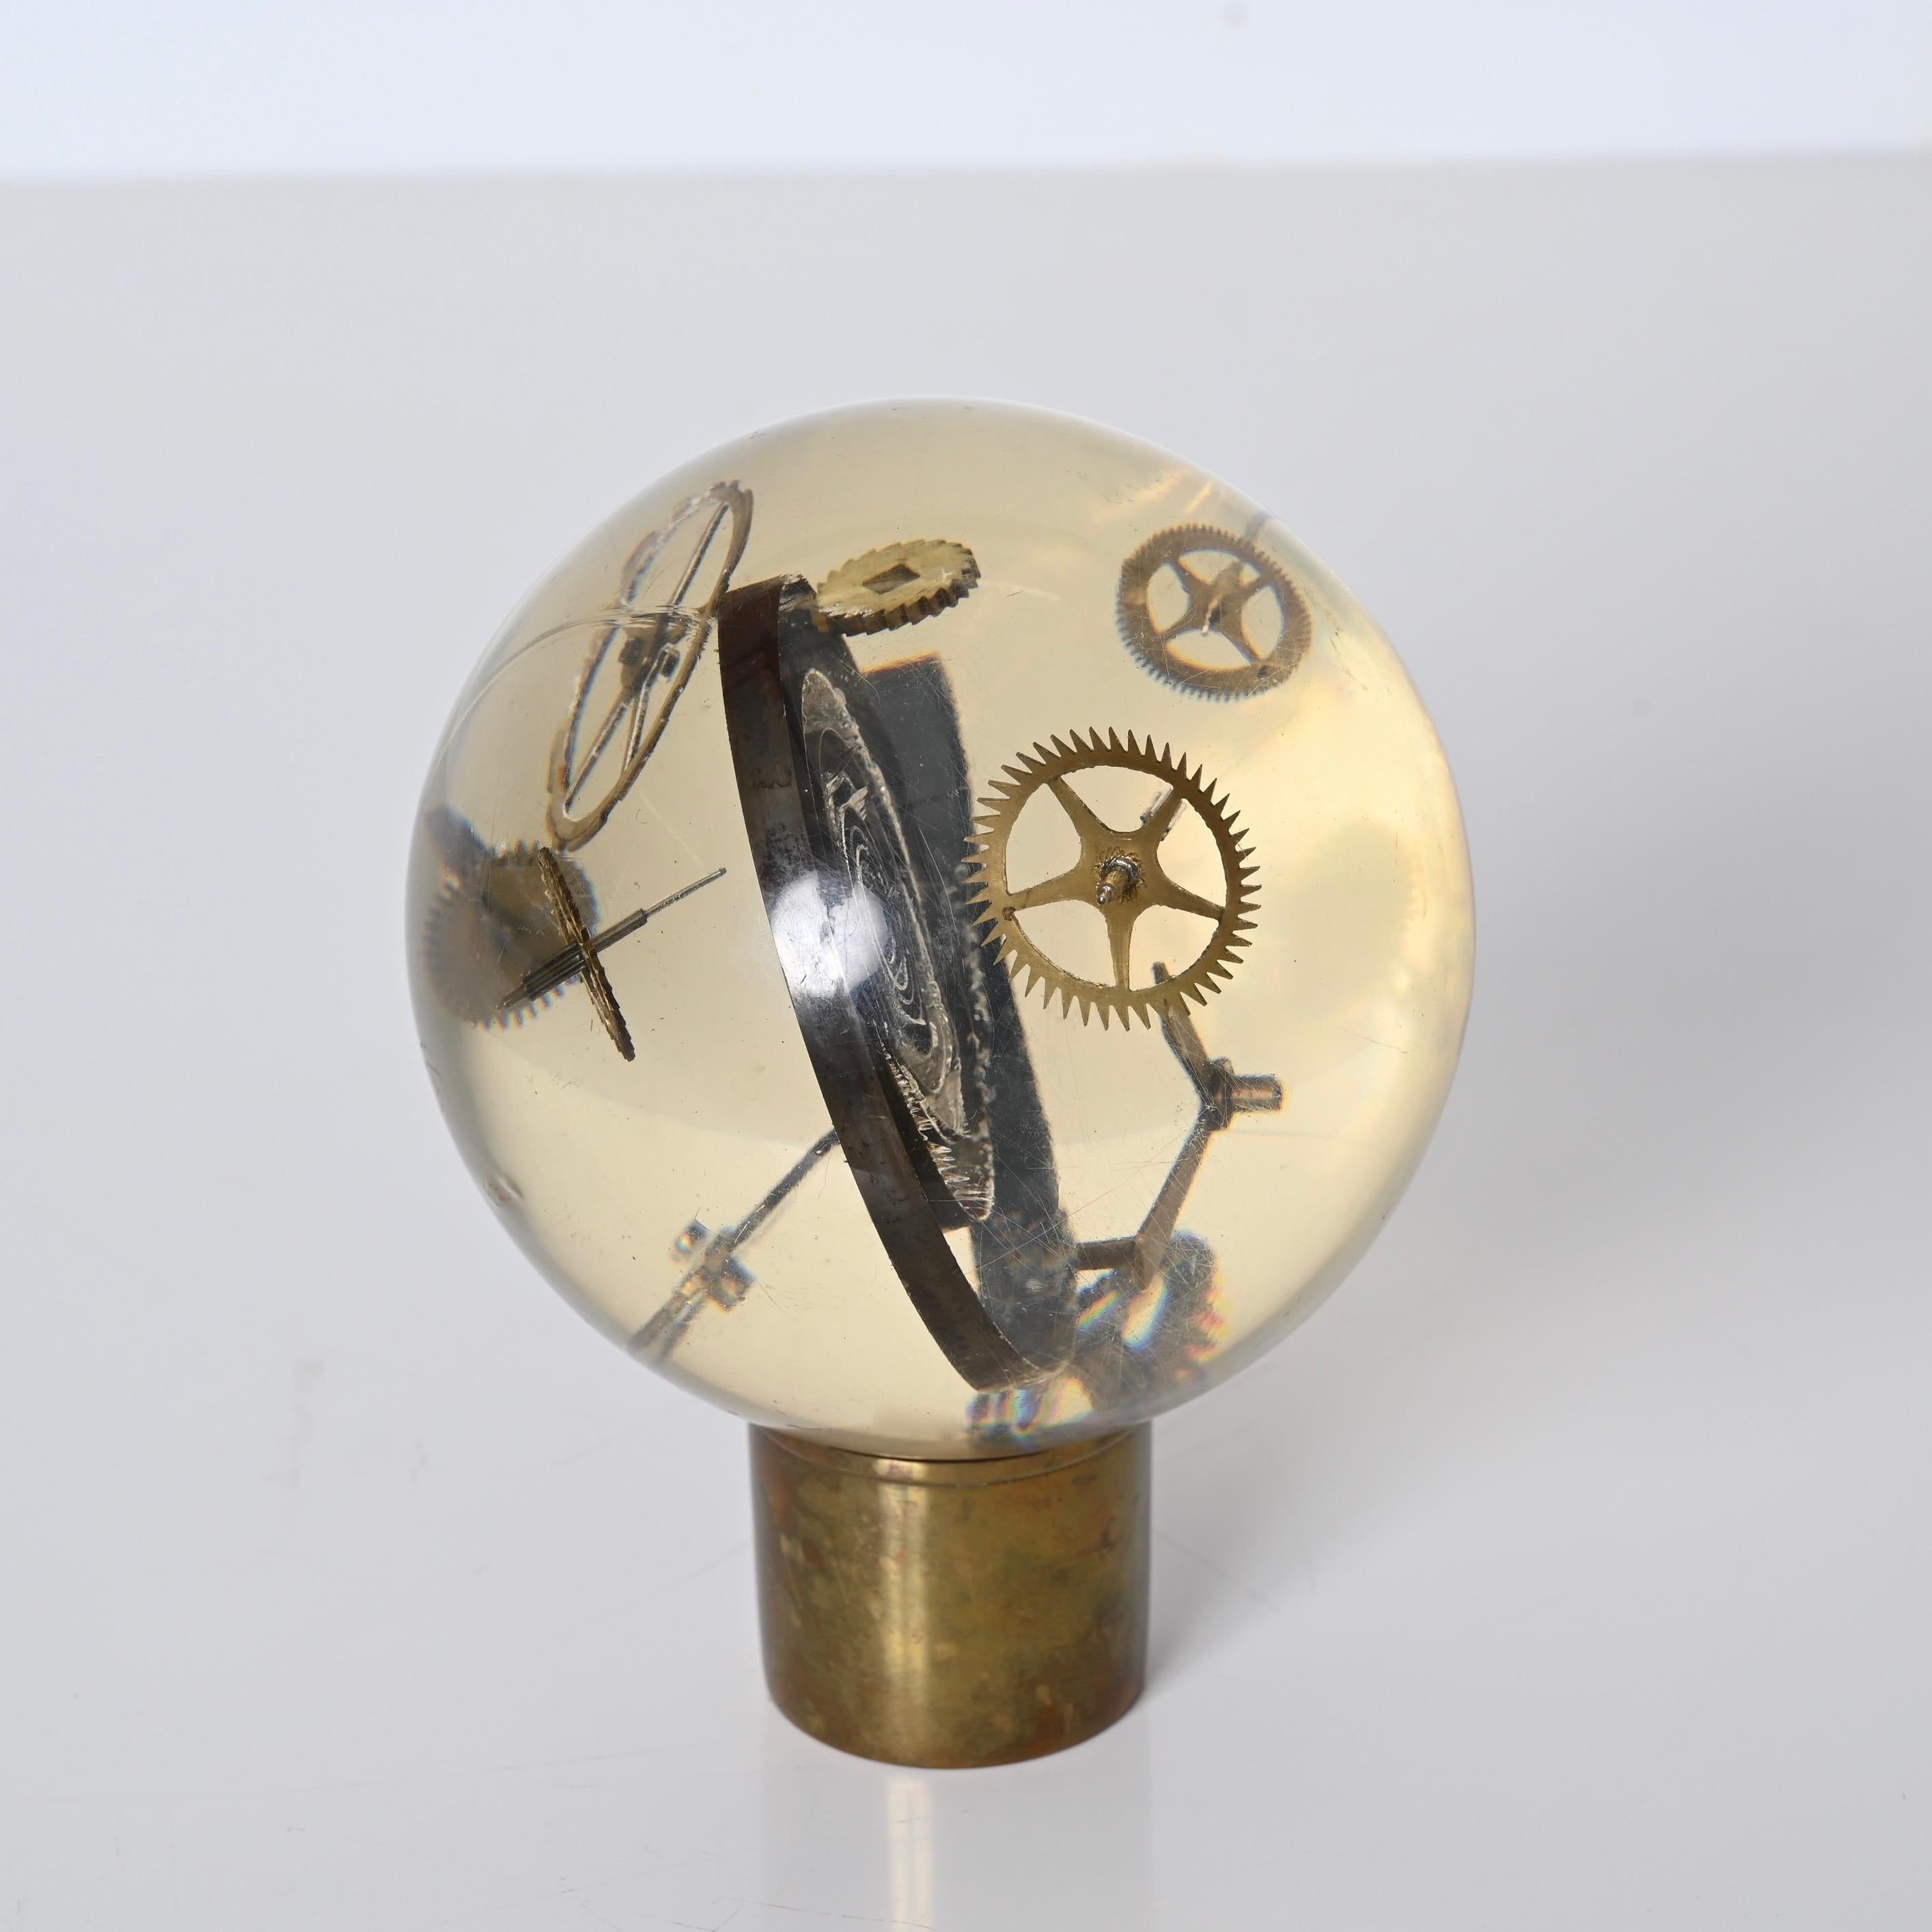 Pierre Giraudon Resin Exploded Clock Globe Sculpture, France 1970s For Sale 4